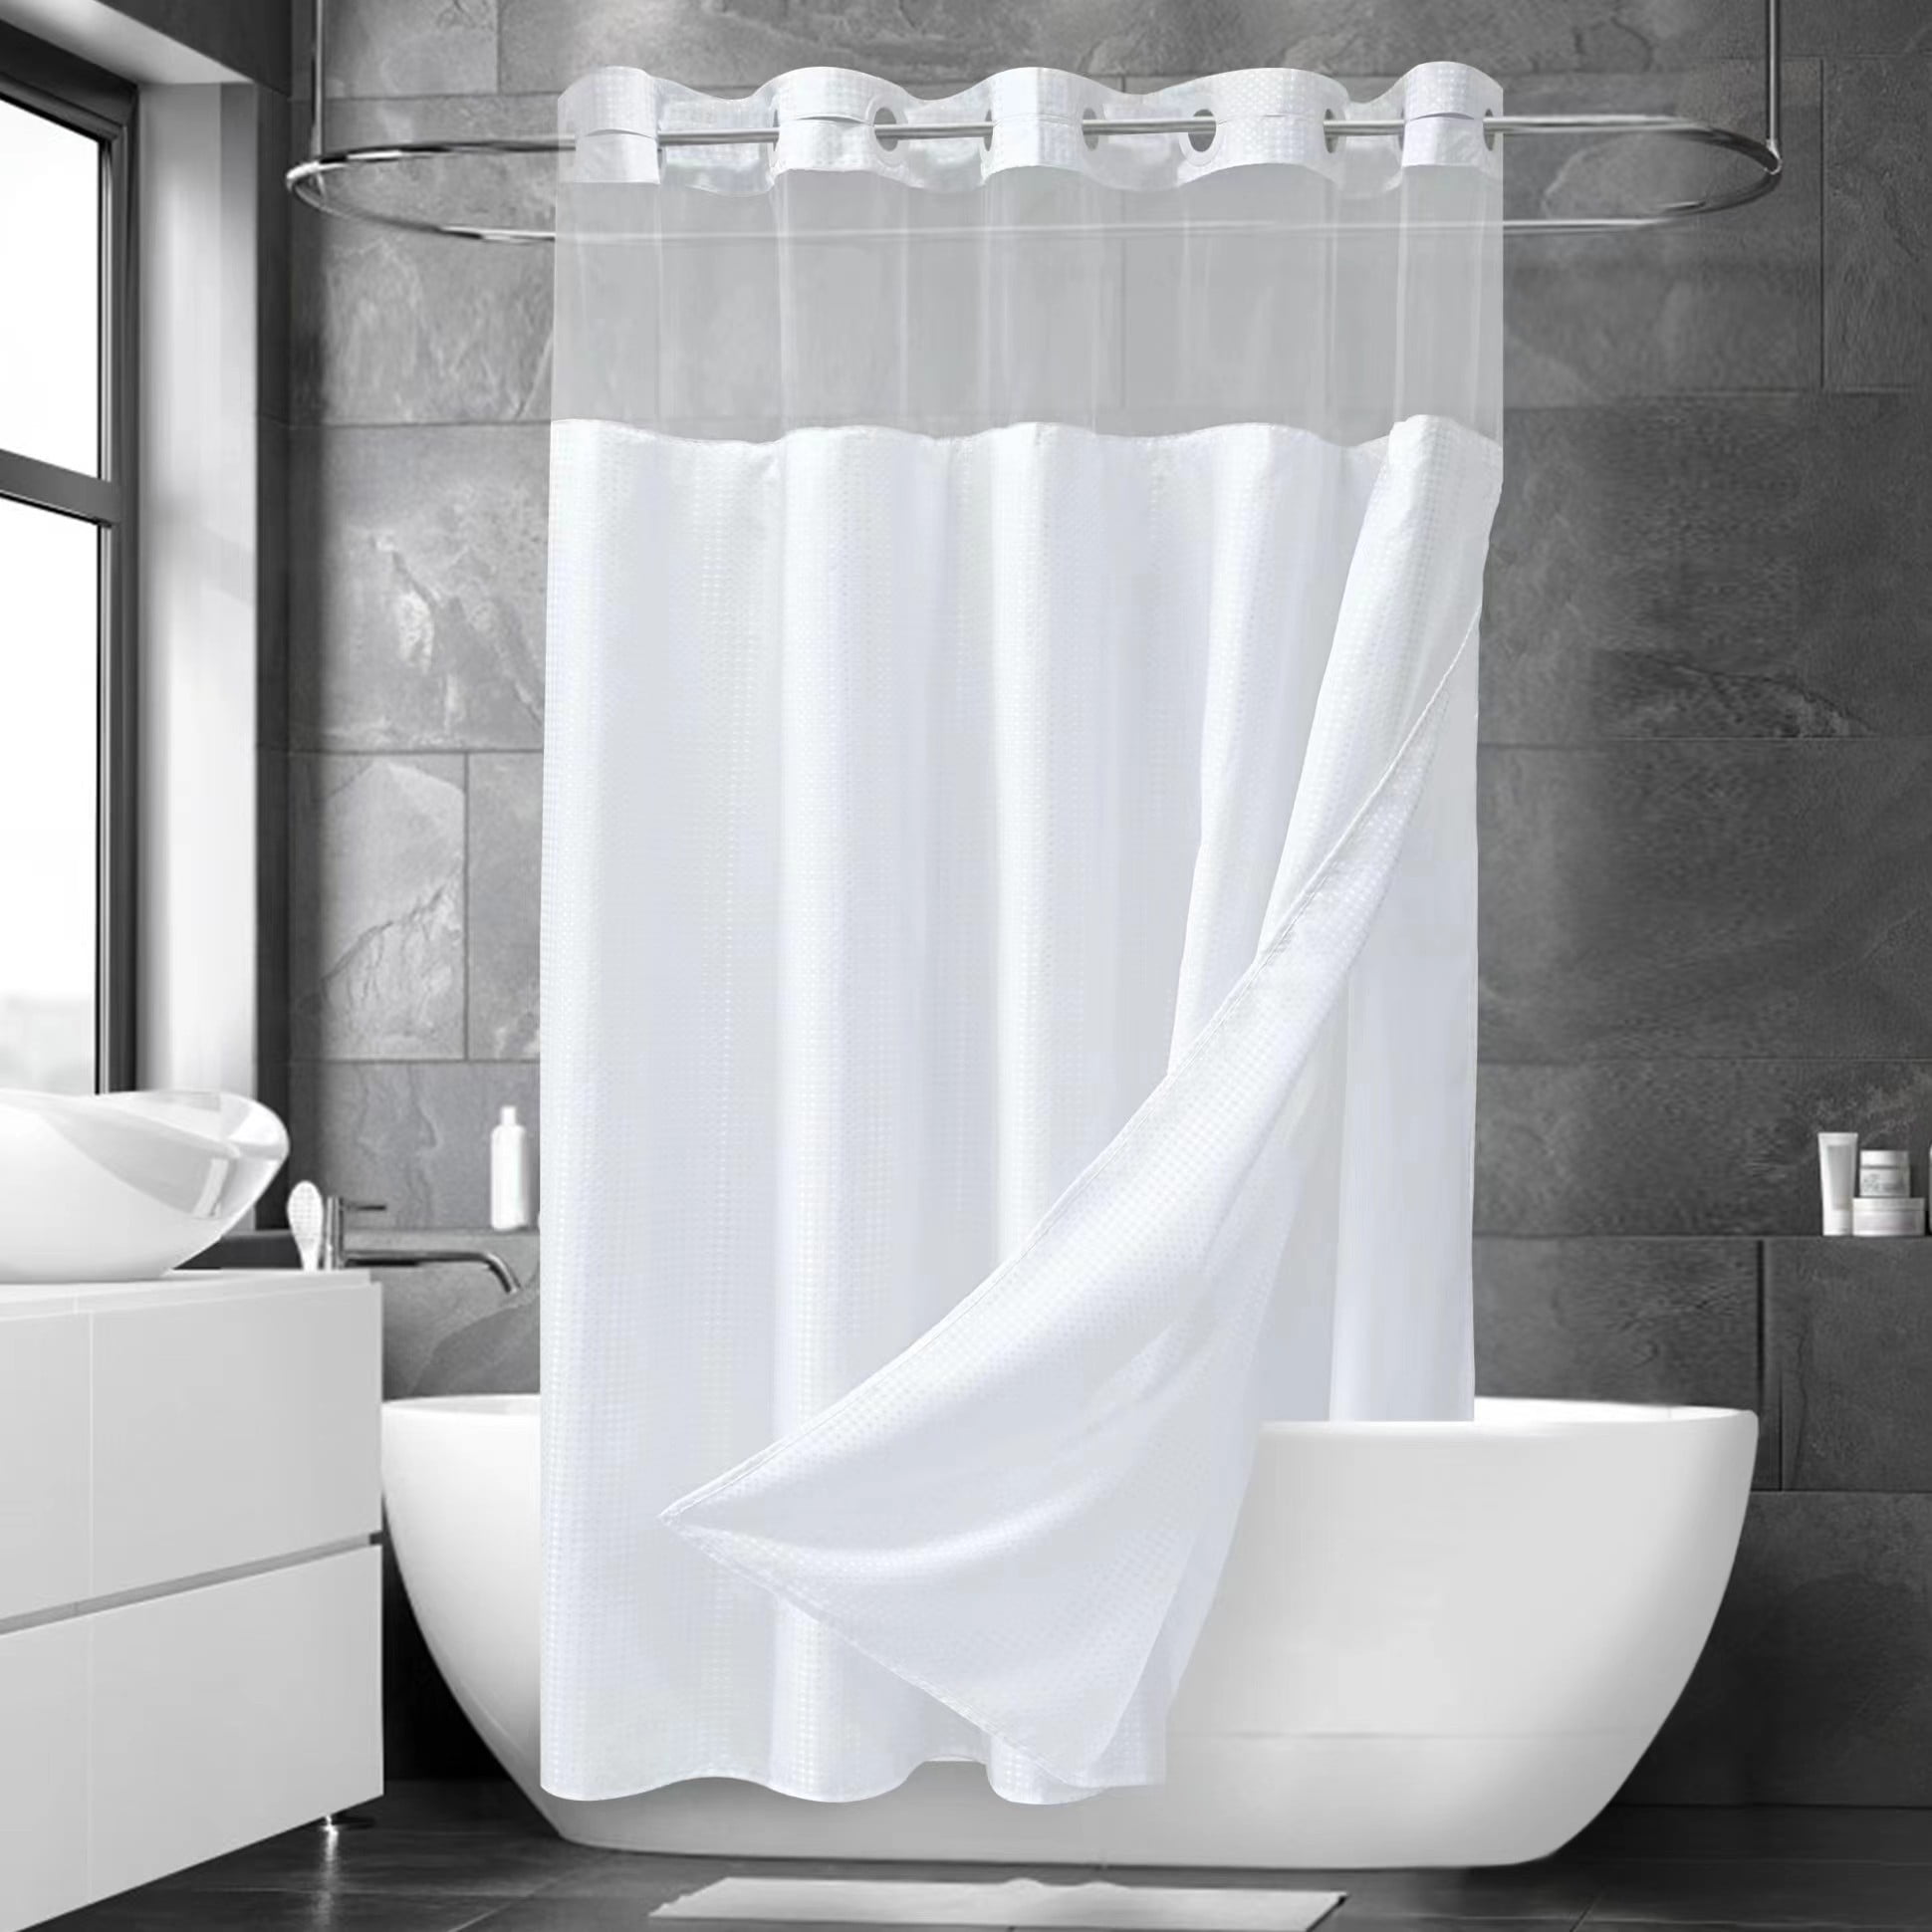 Ikfashoni White Hookless Fabric Shower Curtain with Snap in Liner, Waffle  Weave Waterproof Mesh Window Bathroom Curtain, 72X72 